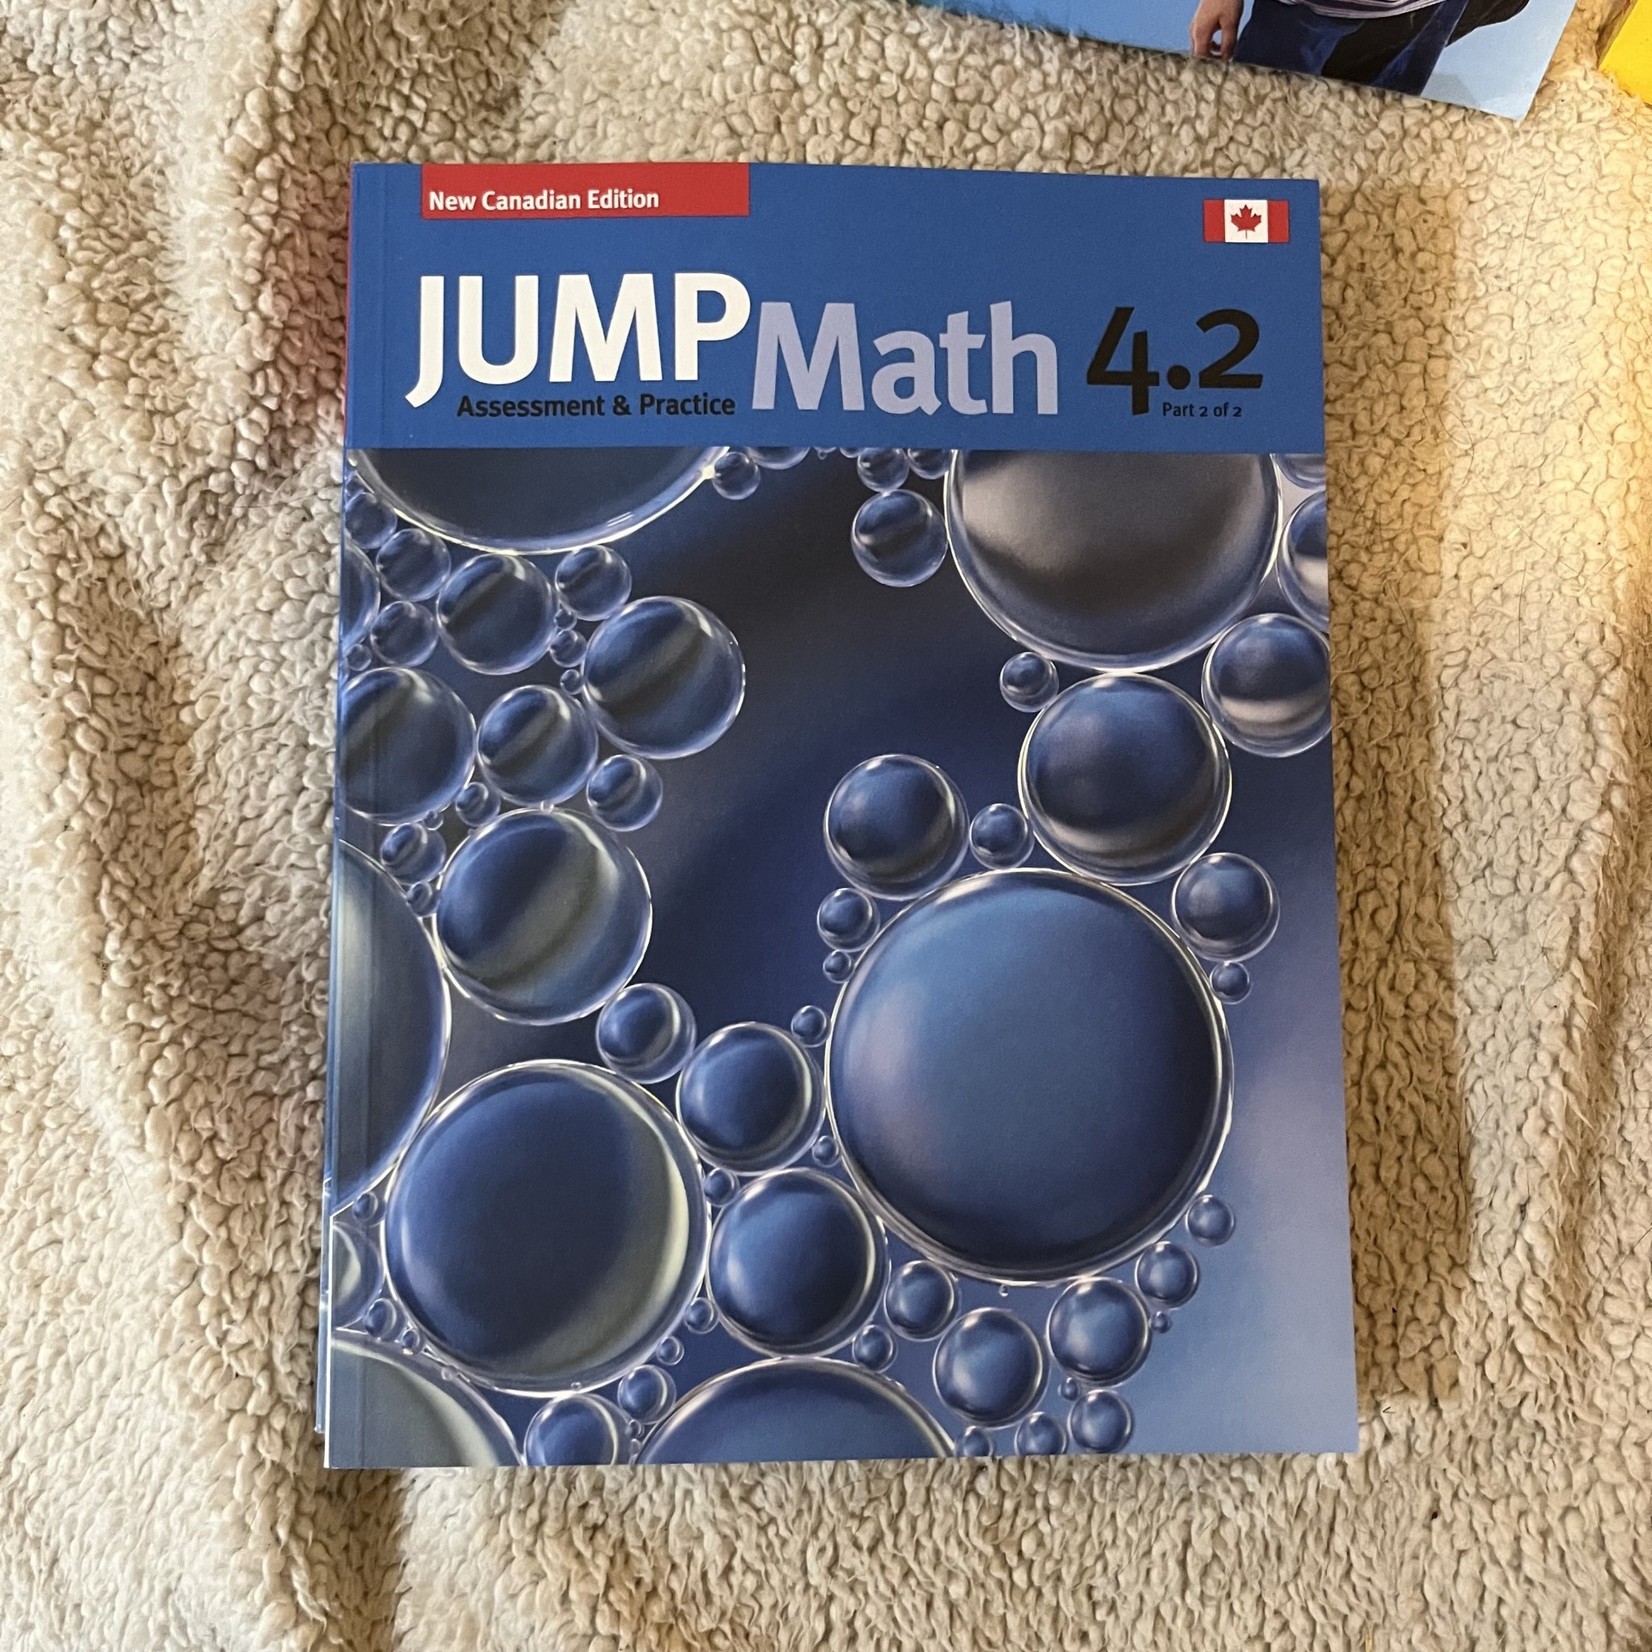 Jump Math 4.2 - New Canadian Edition